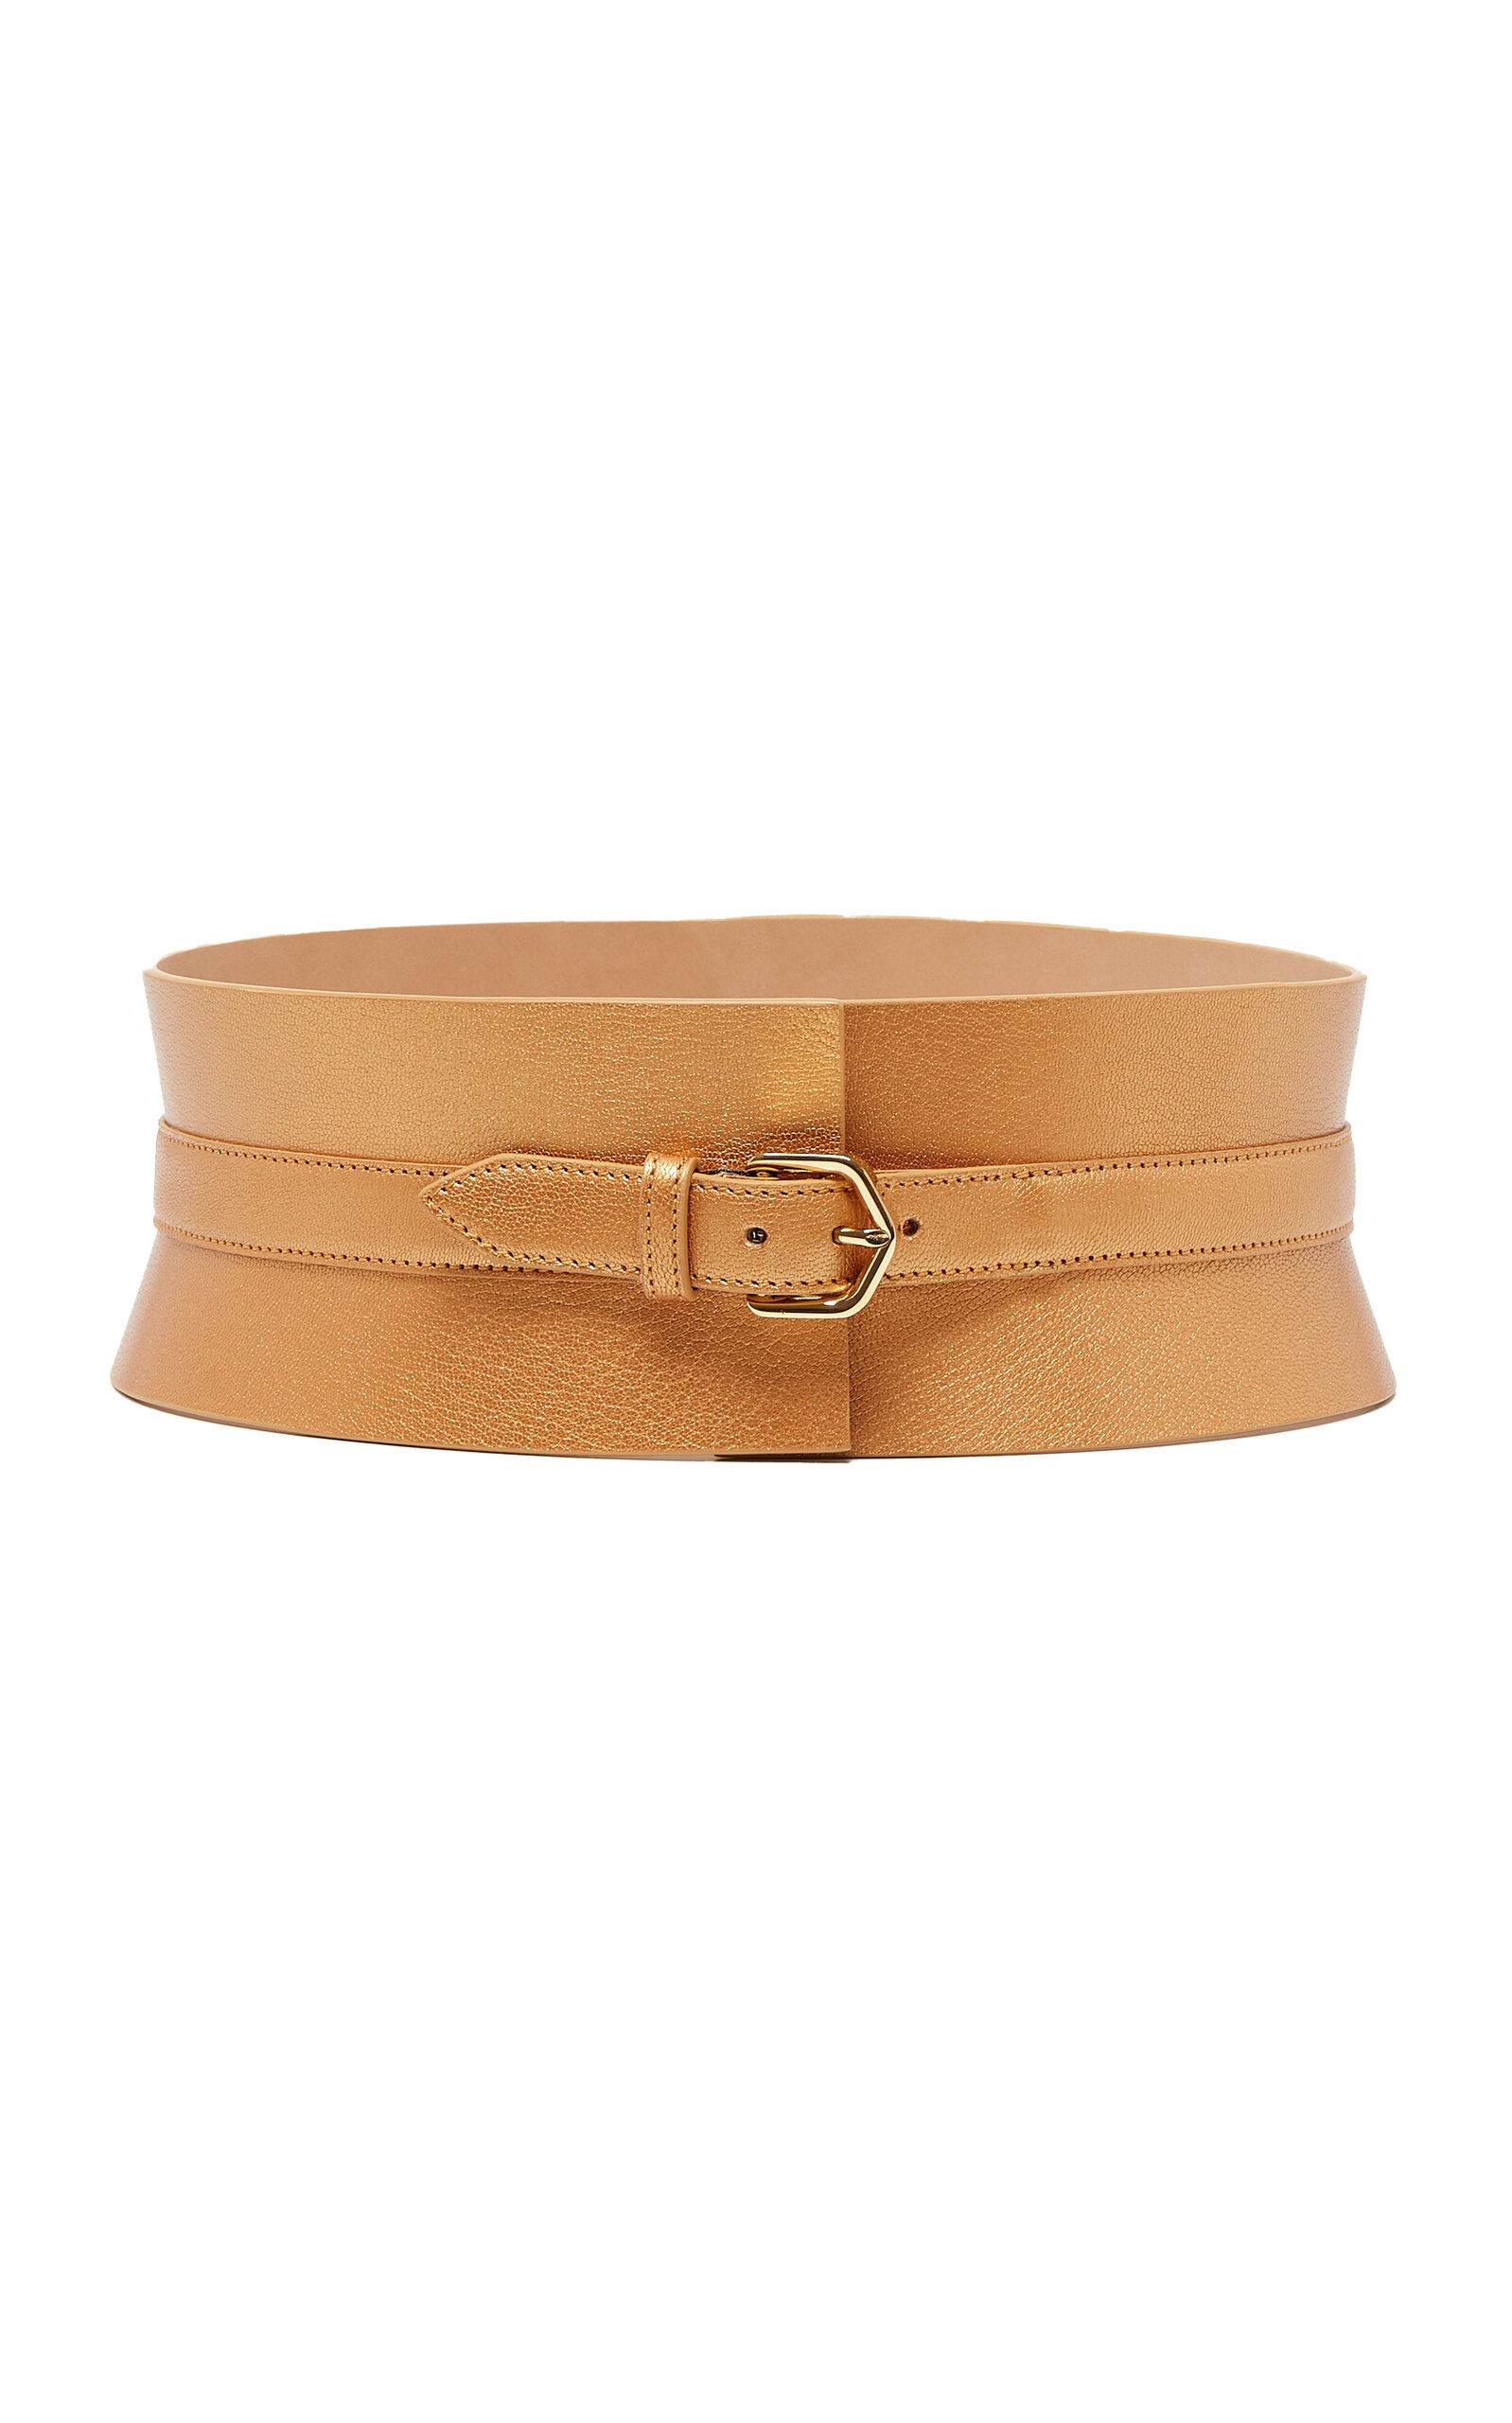 Neo Leather Bustier Belt brown - 1